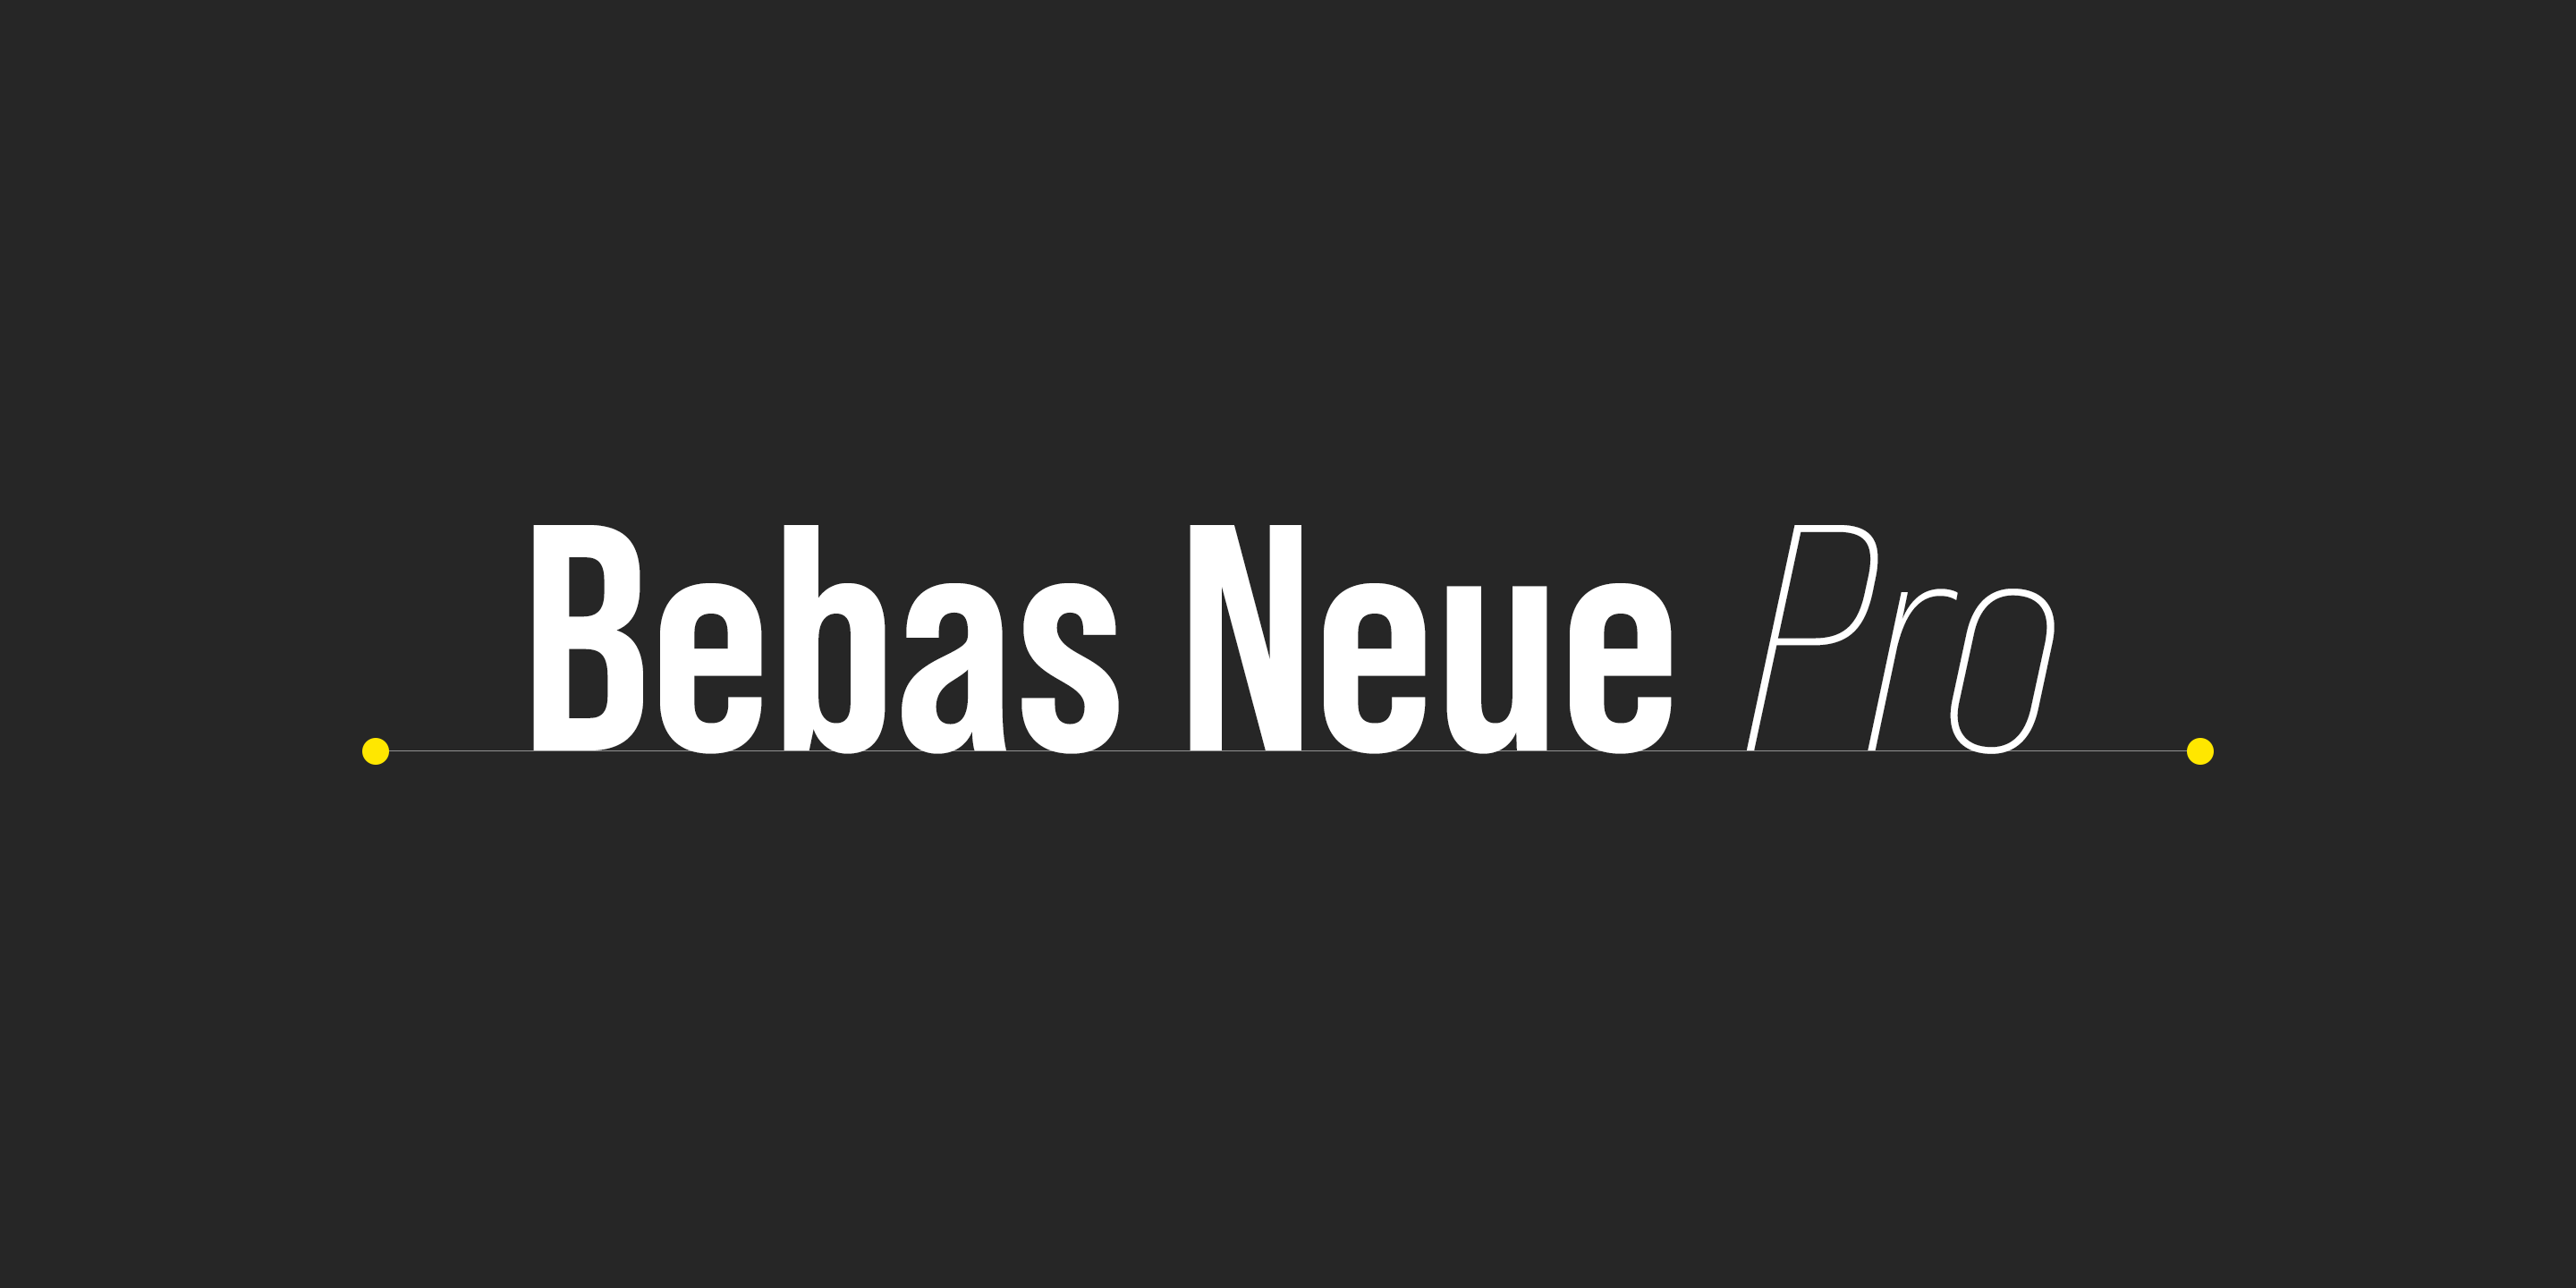 Bebas Neue Pro英文字体完整版 设计素材 第1张